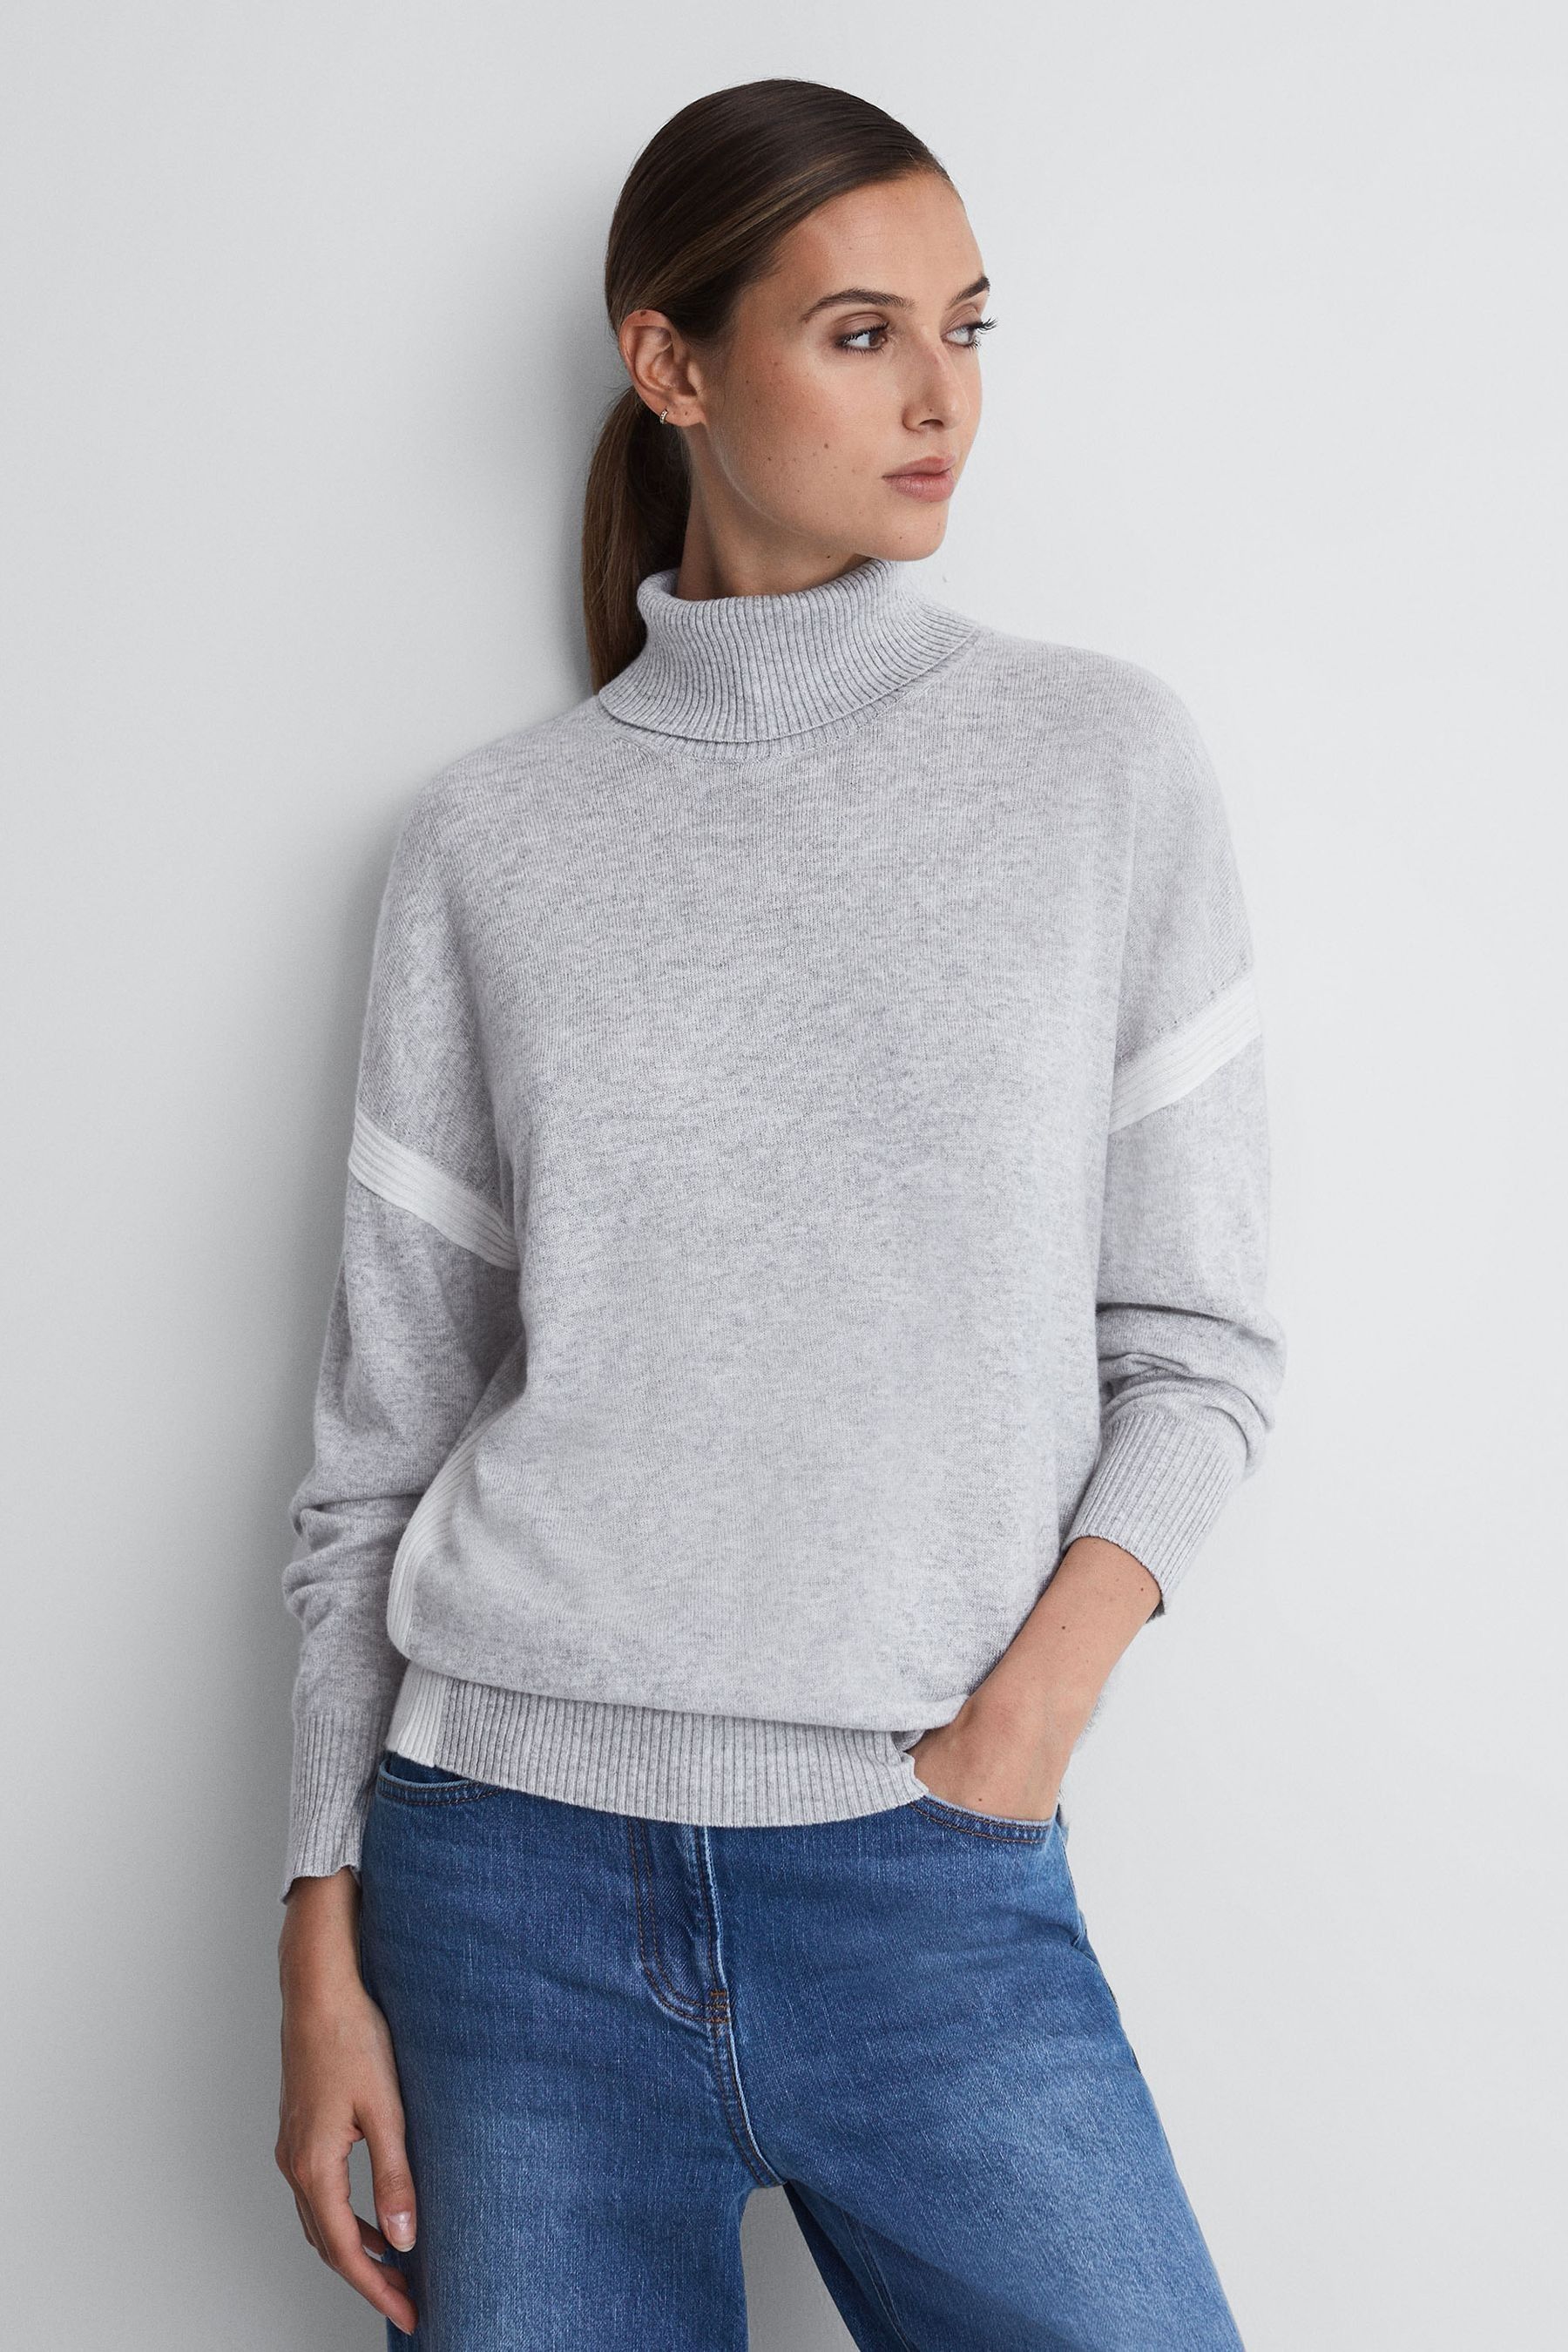 Nova - Cream/Grey Knitted...